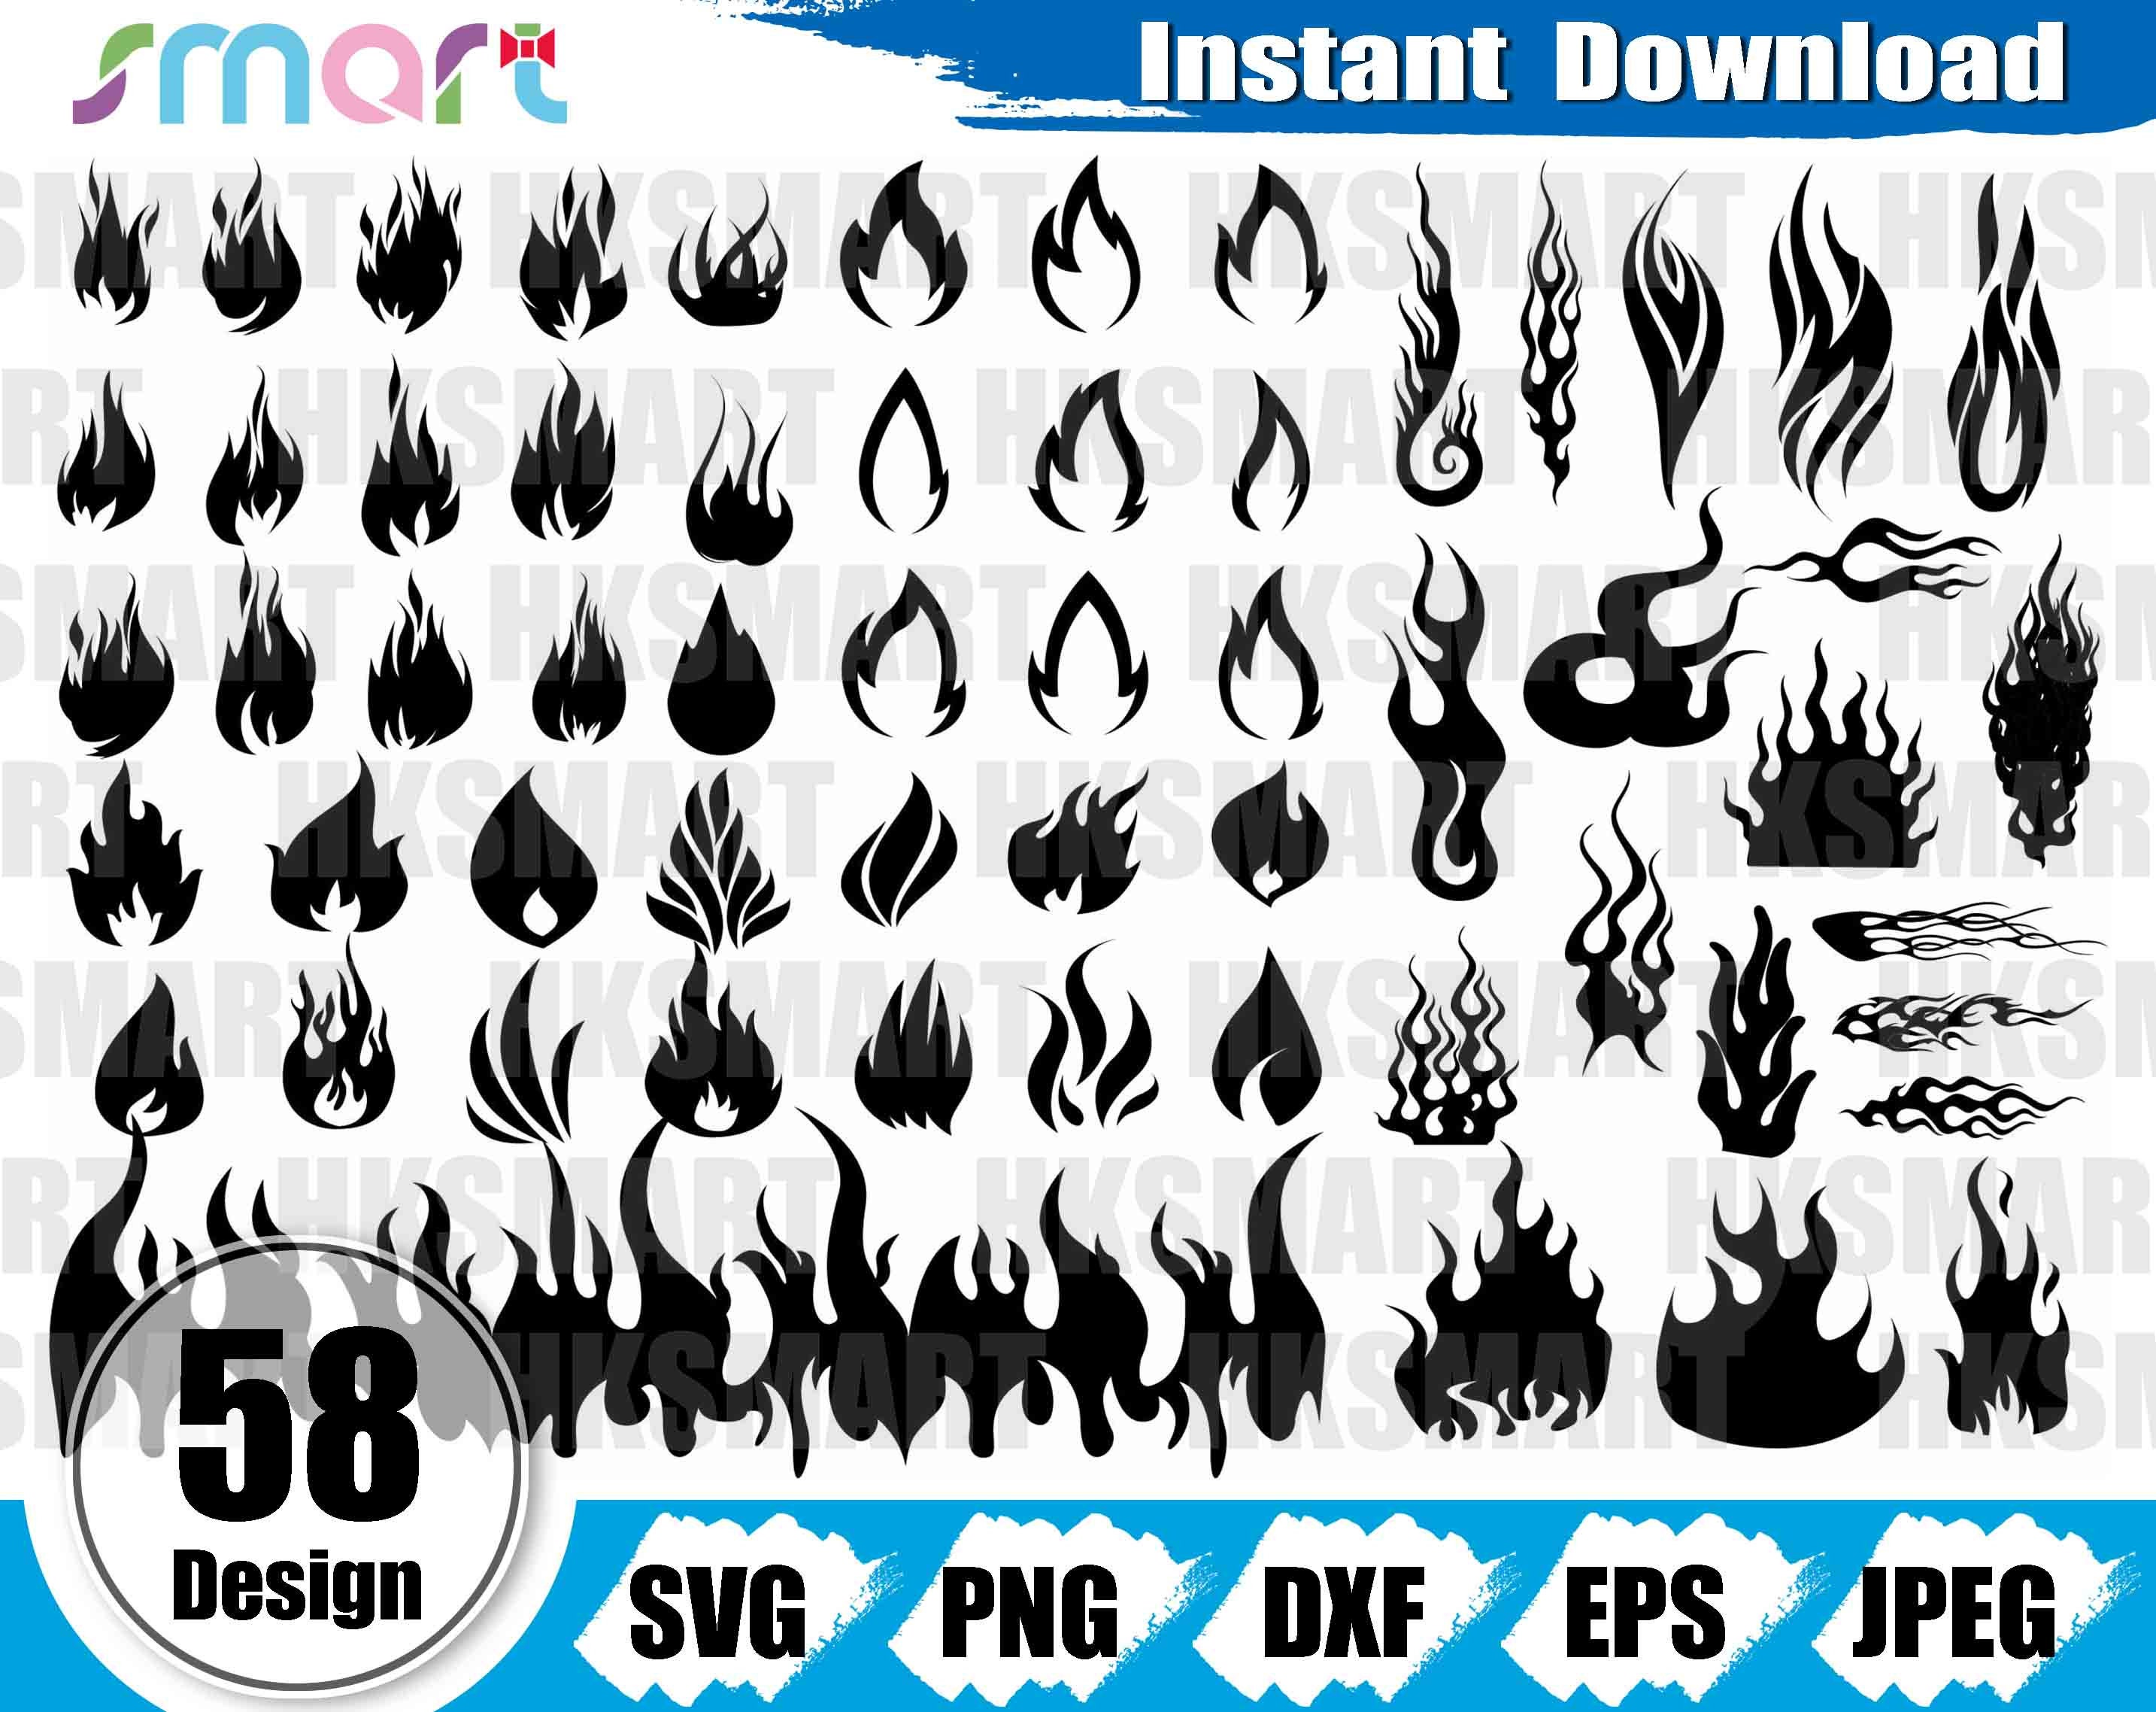 Free Fire Flames Background - Download in Illustrator, EPS, SVG, JPG, PNG